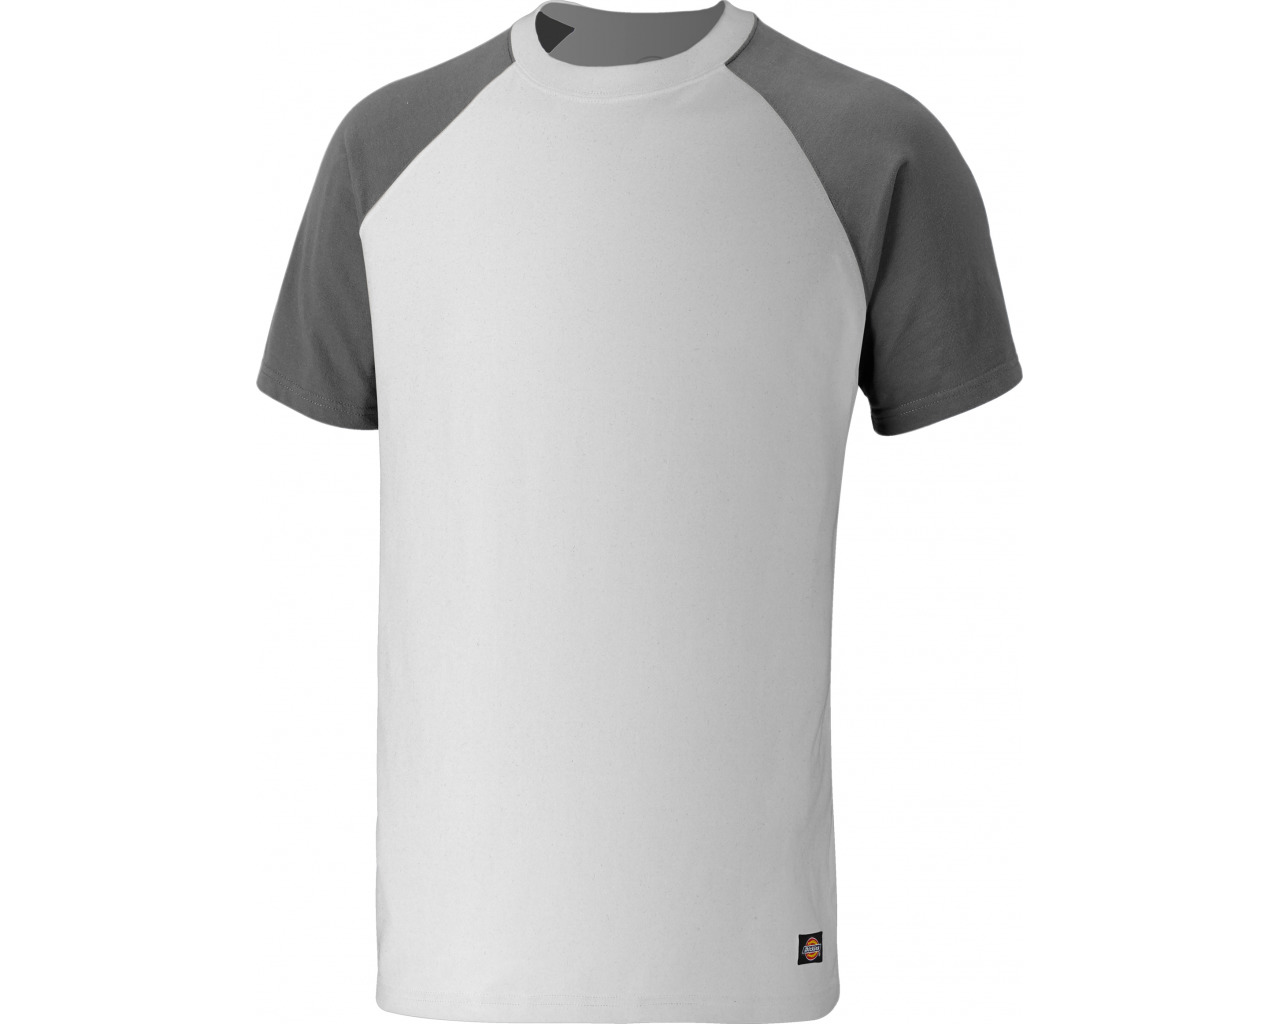 DICKIES T-Shirt Two Tone weiß/grau 100%Baumwolle 180g/m²